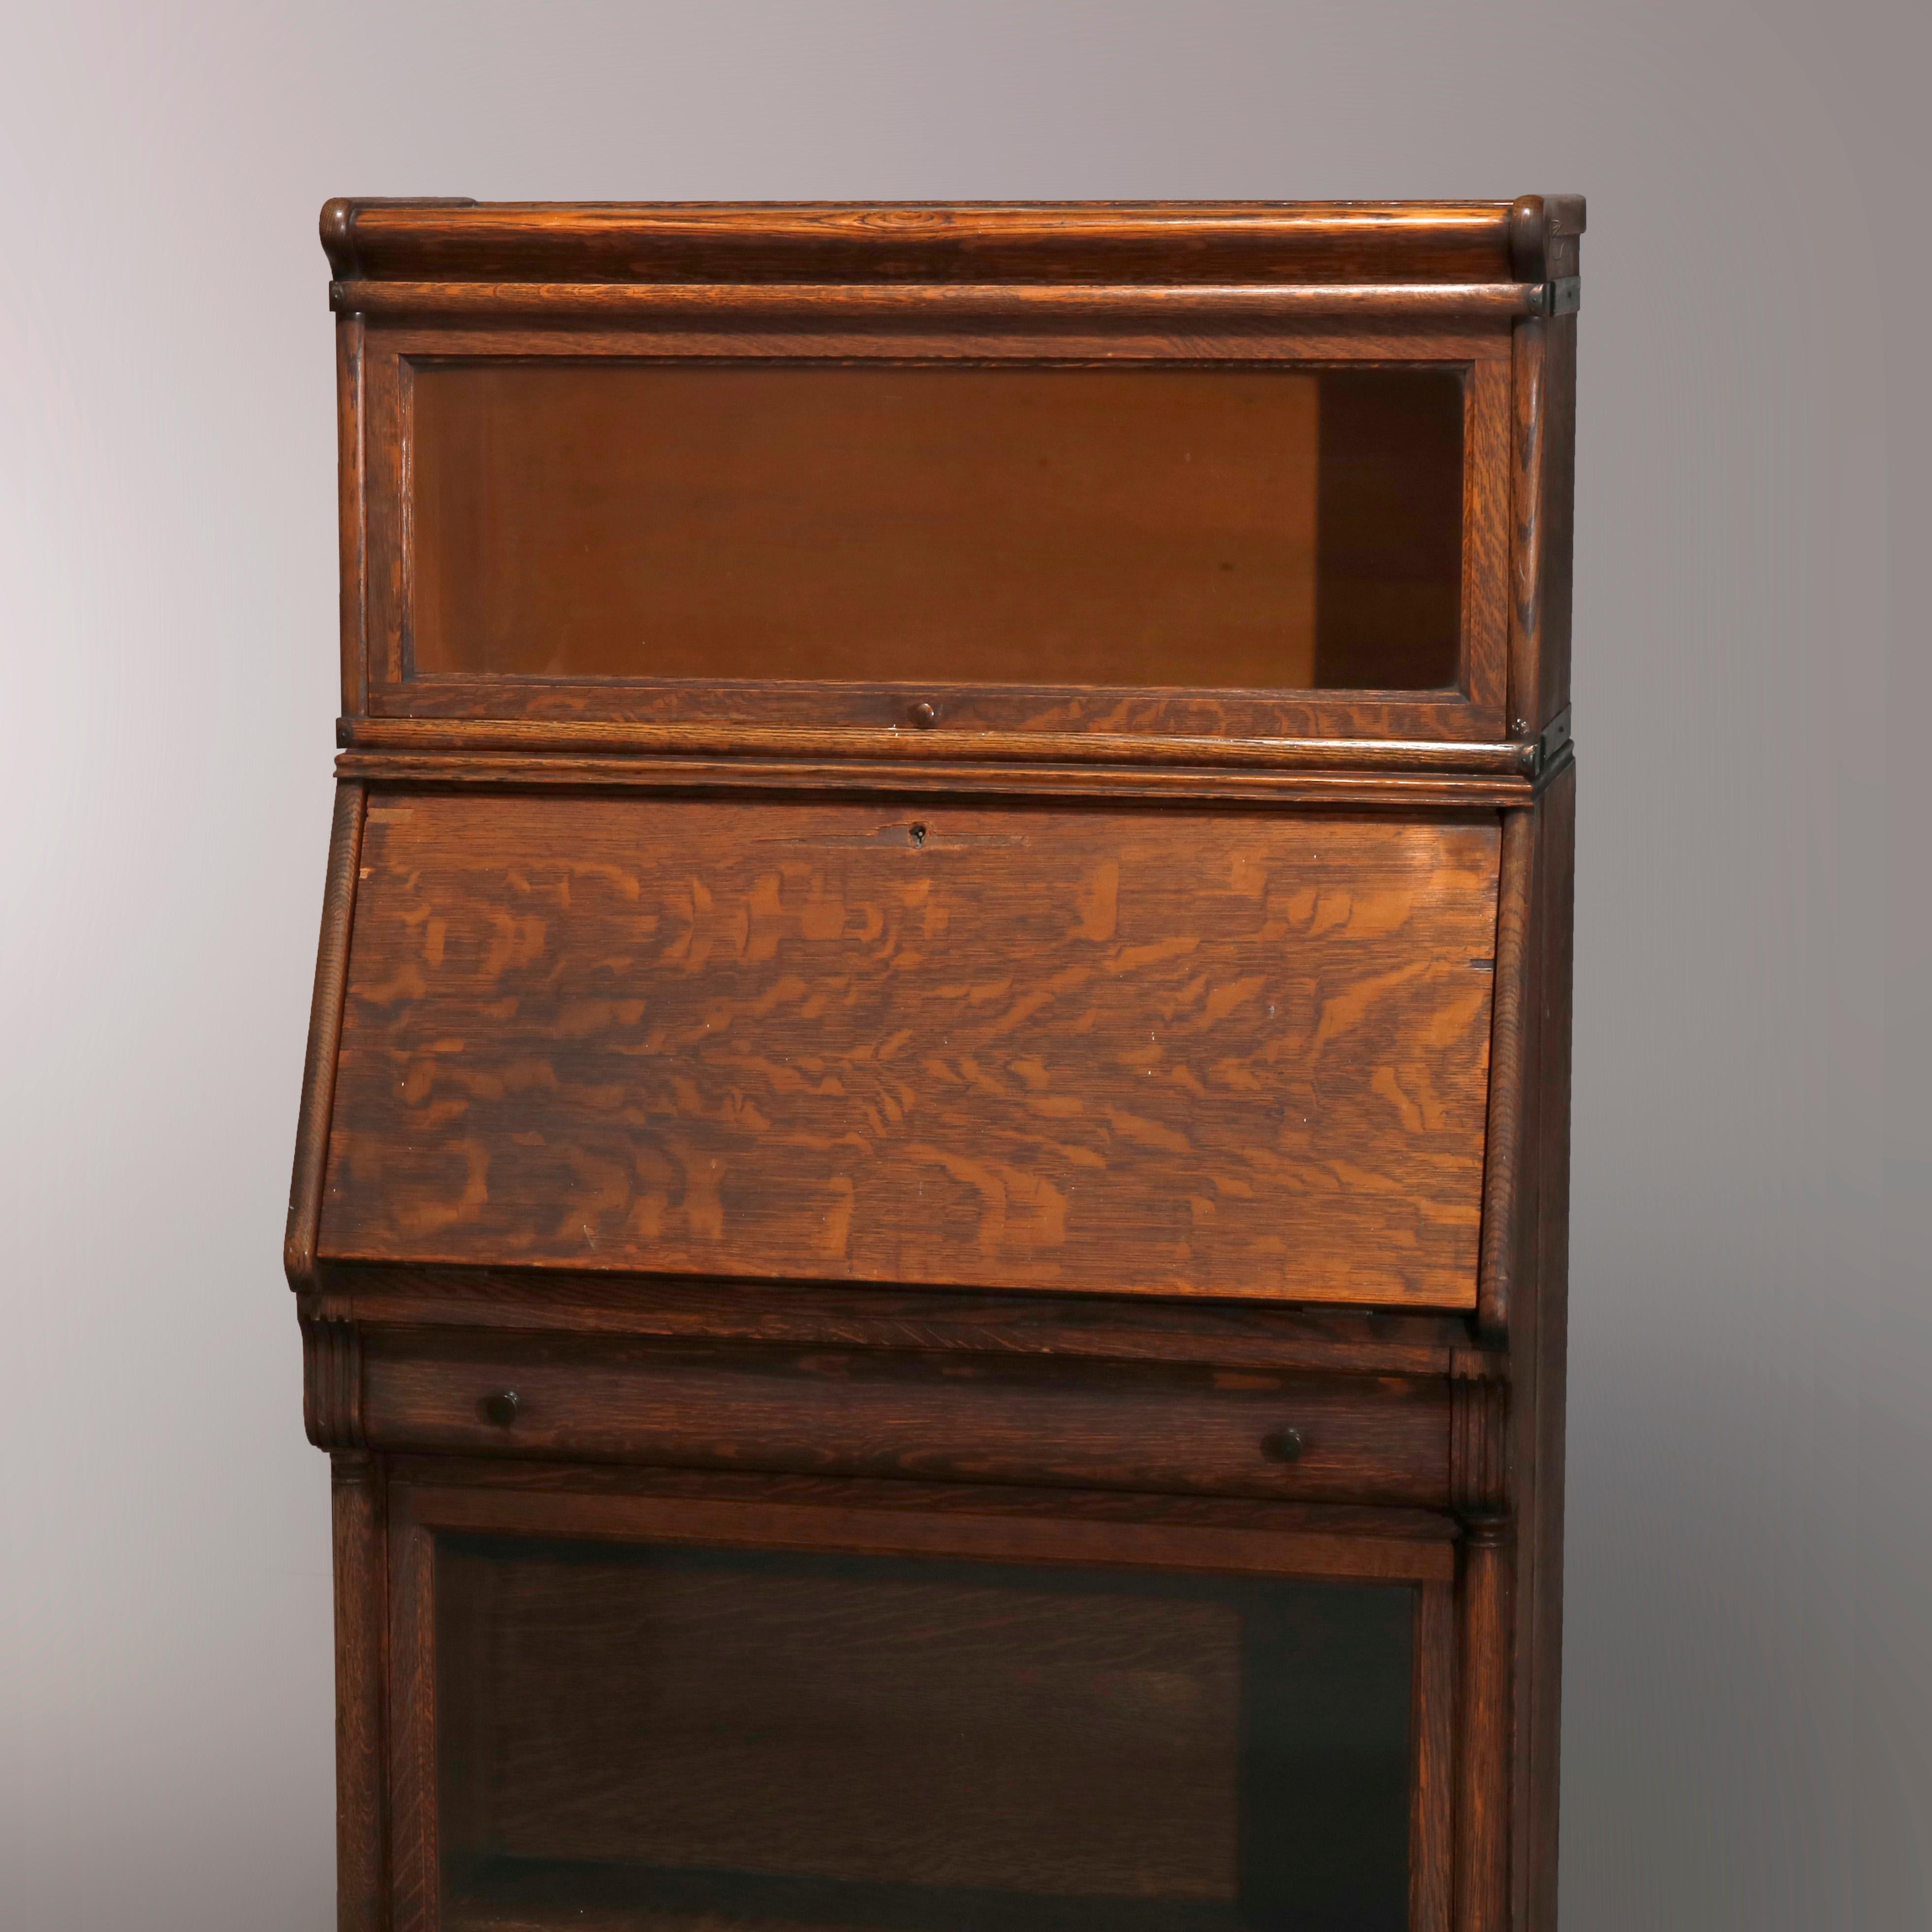 Carved Arts & Crafts Globe Wernicke Barrister Bookcase Slant Front Secretary circa 1910